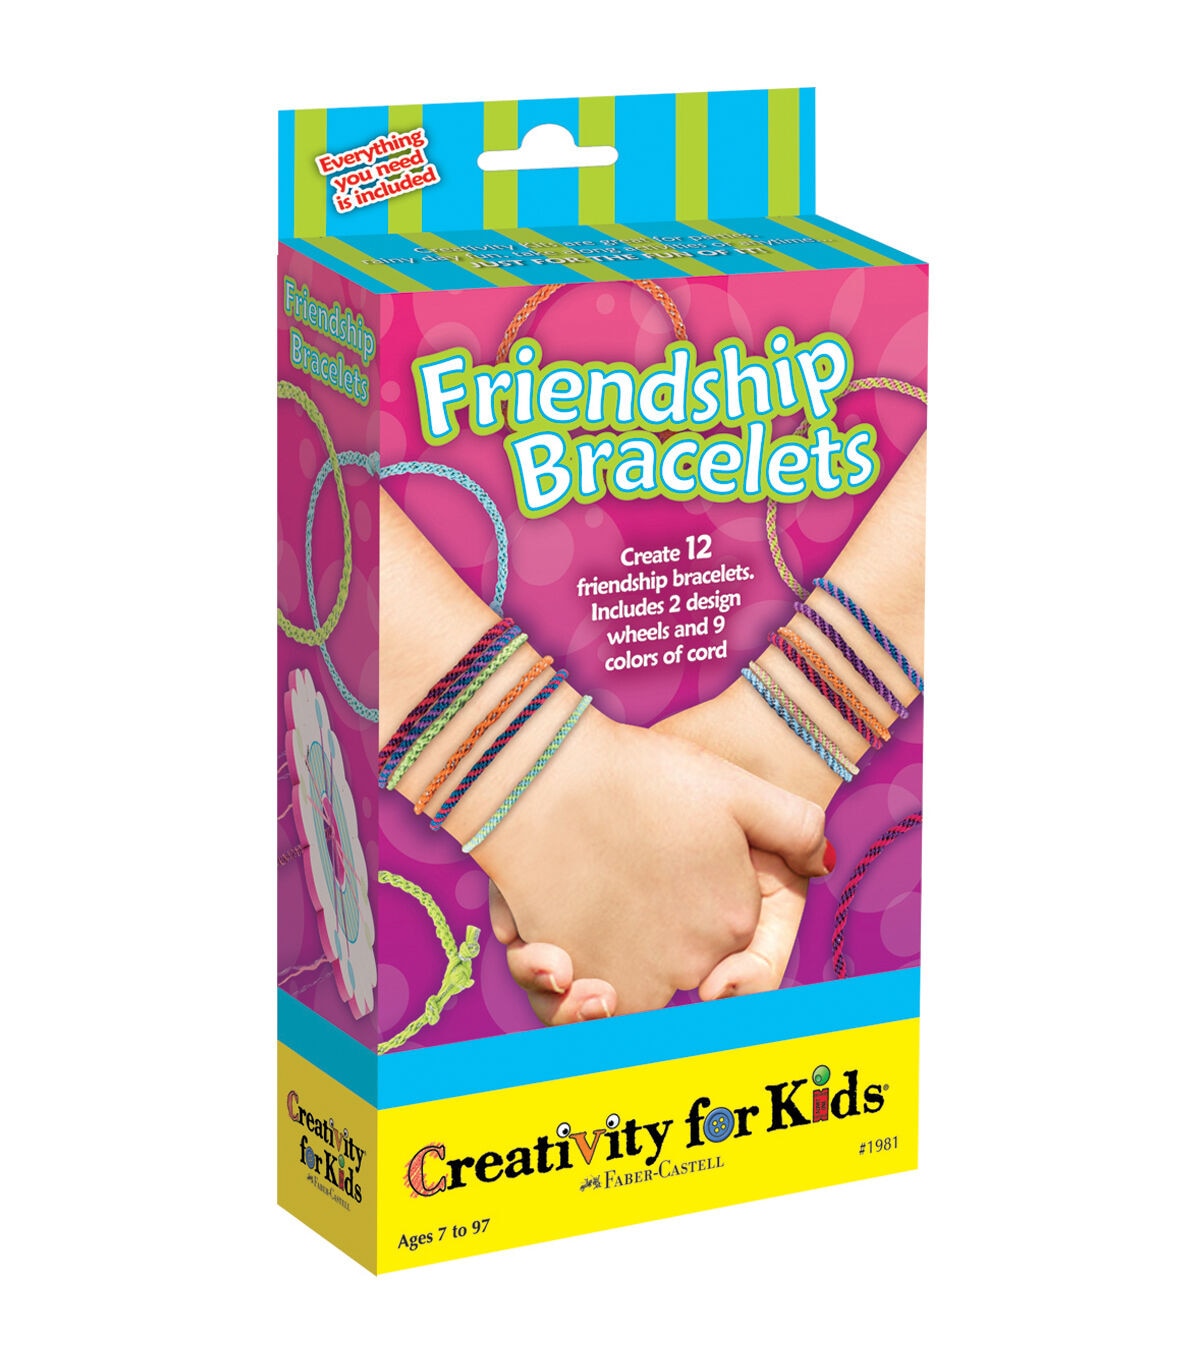 Friendship Bracelet Pattern Notebook: Templates for up to 14 string friendship  bracelet patterns: Templates, Cutiepie: 9781720060772: Amazon.com: Books